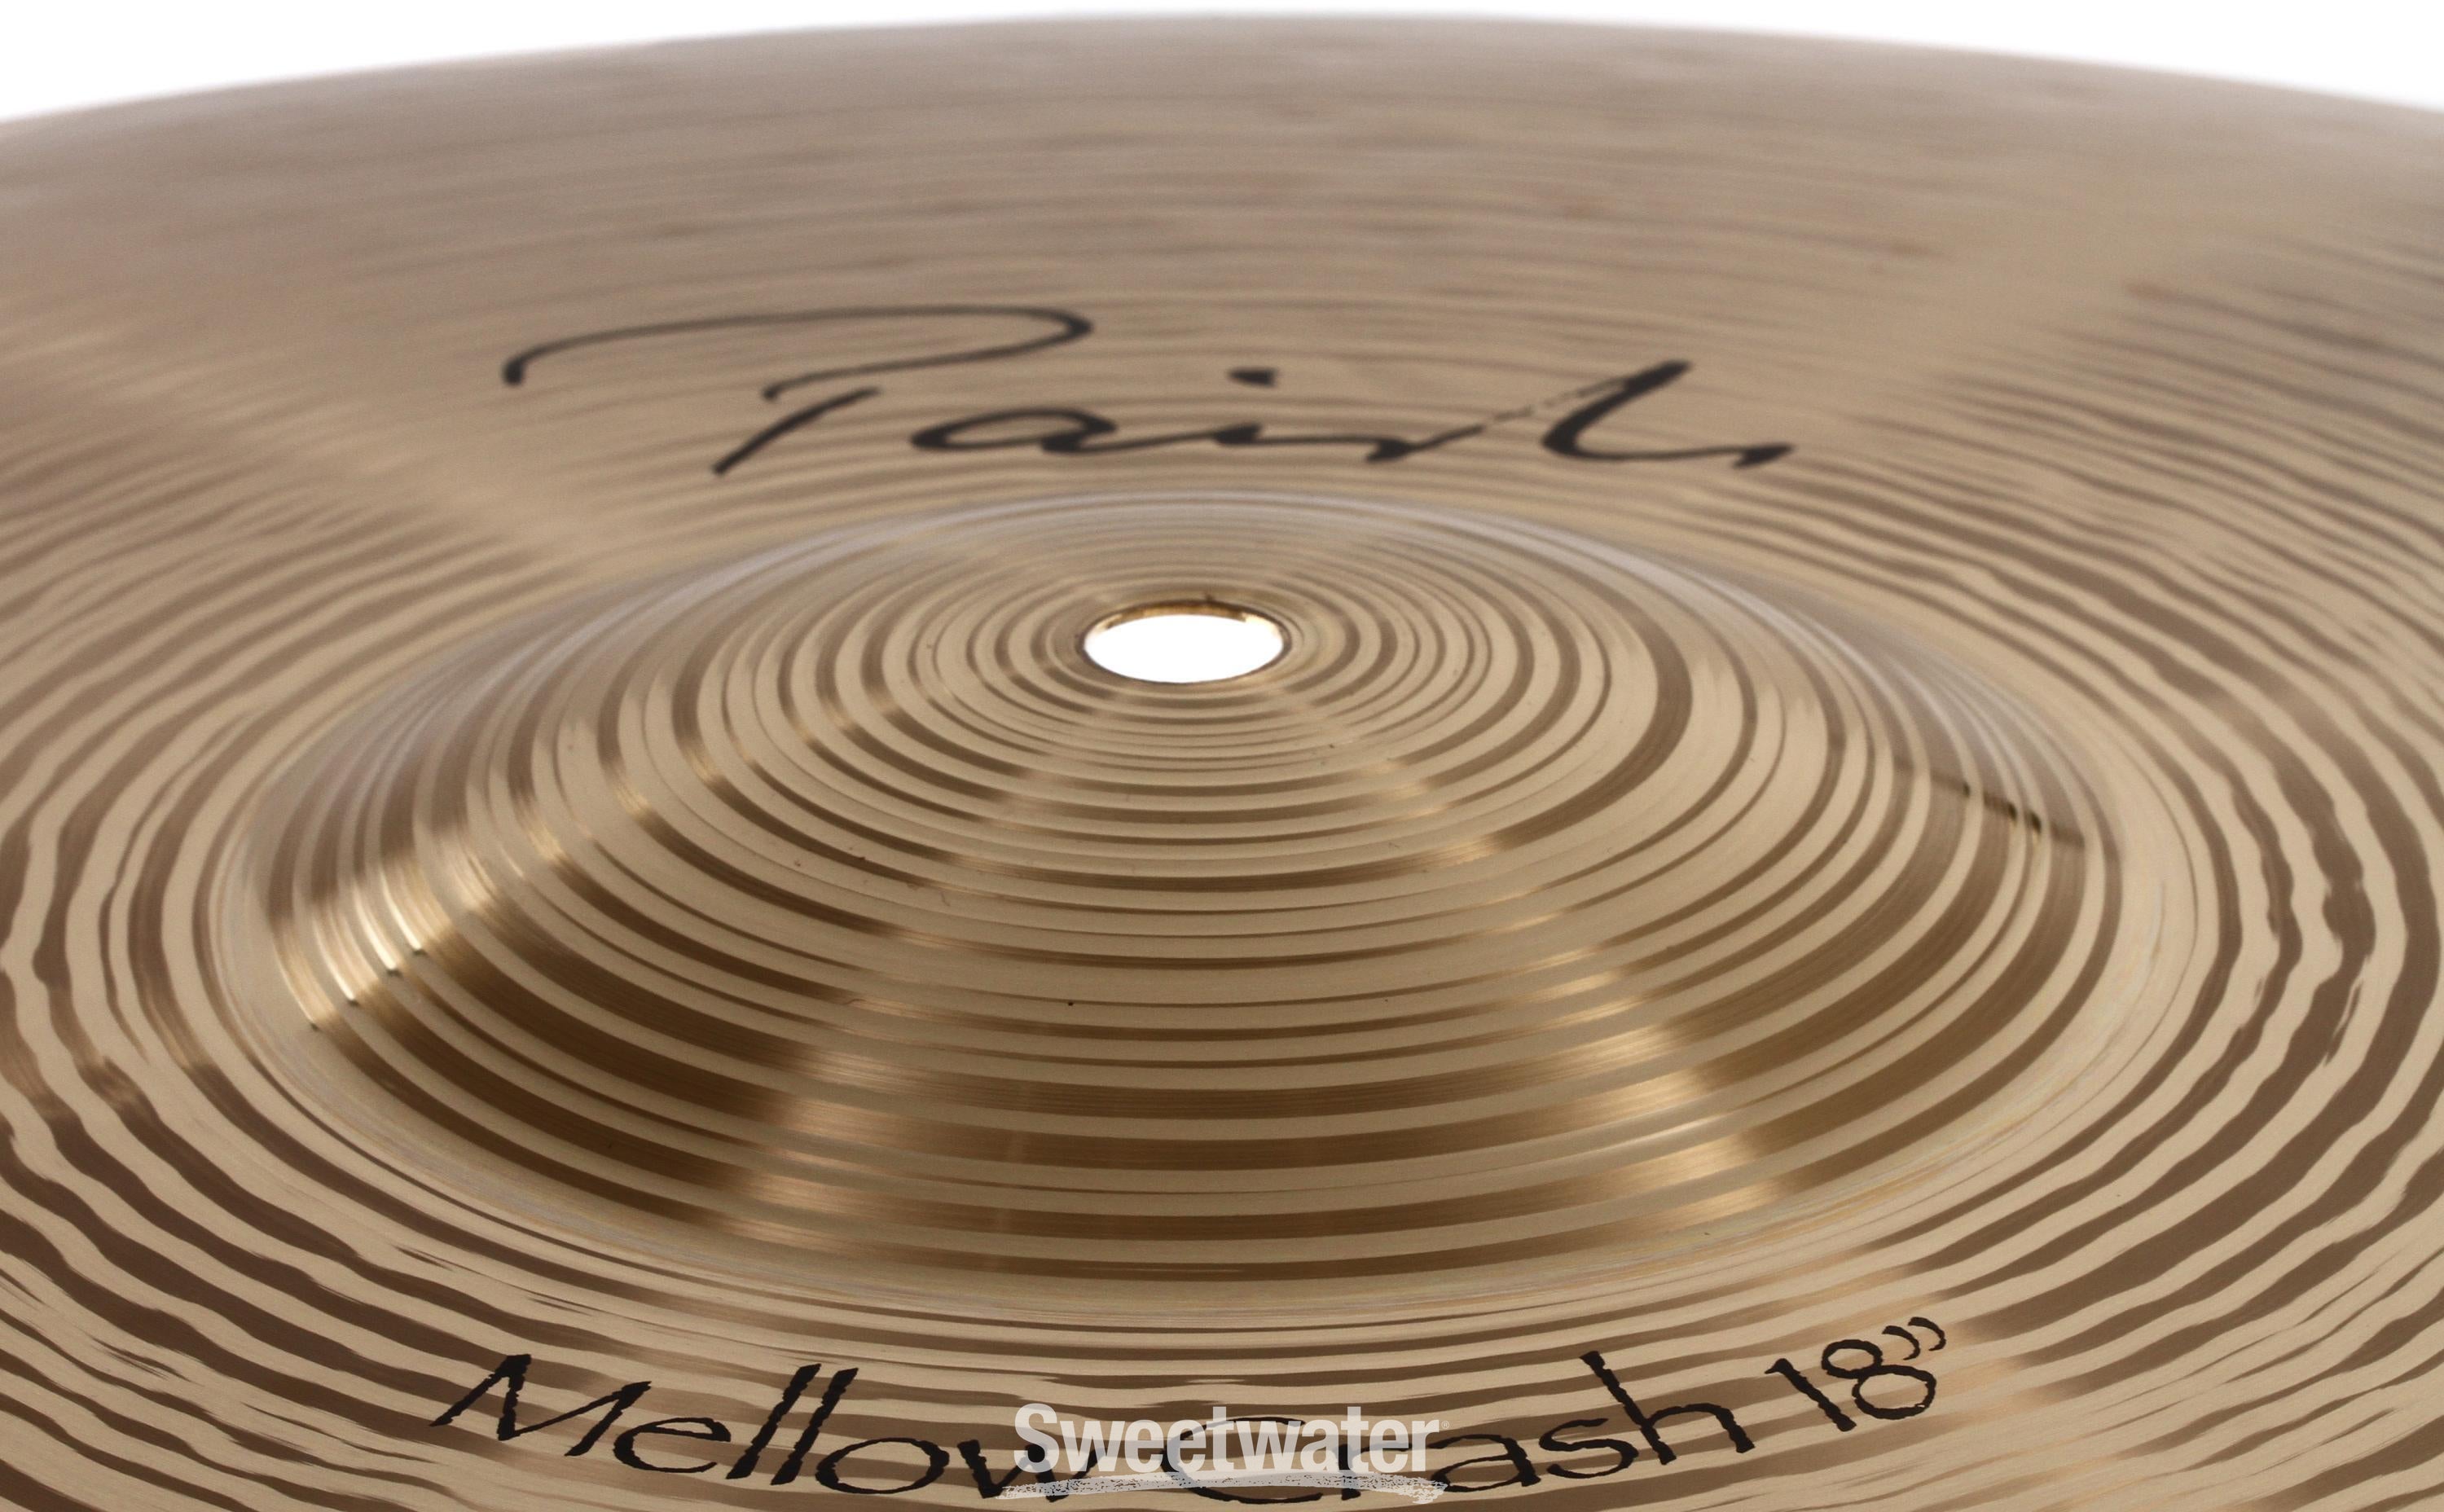 Paiste 18 inch Signature Mellow Crash Cymbal